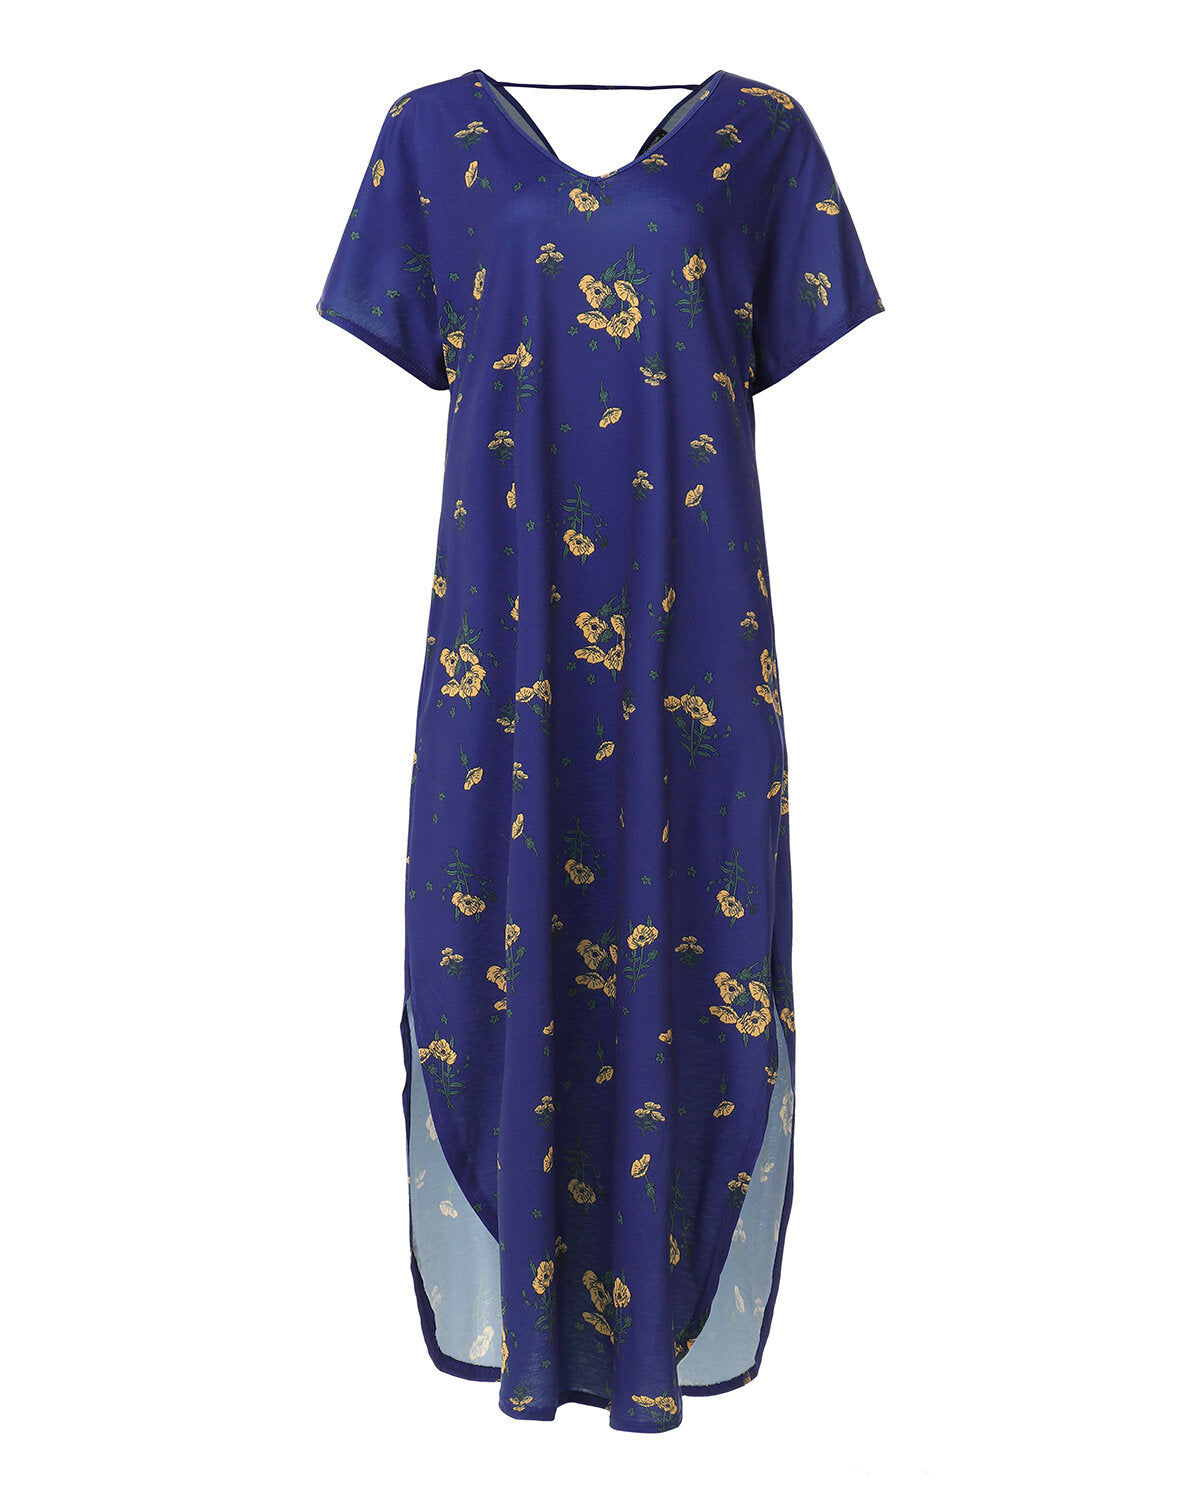 Women Summer Floral Print V Neck Short Sleeves Casual Loose Long Maxi Dress